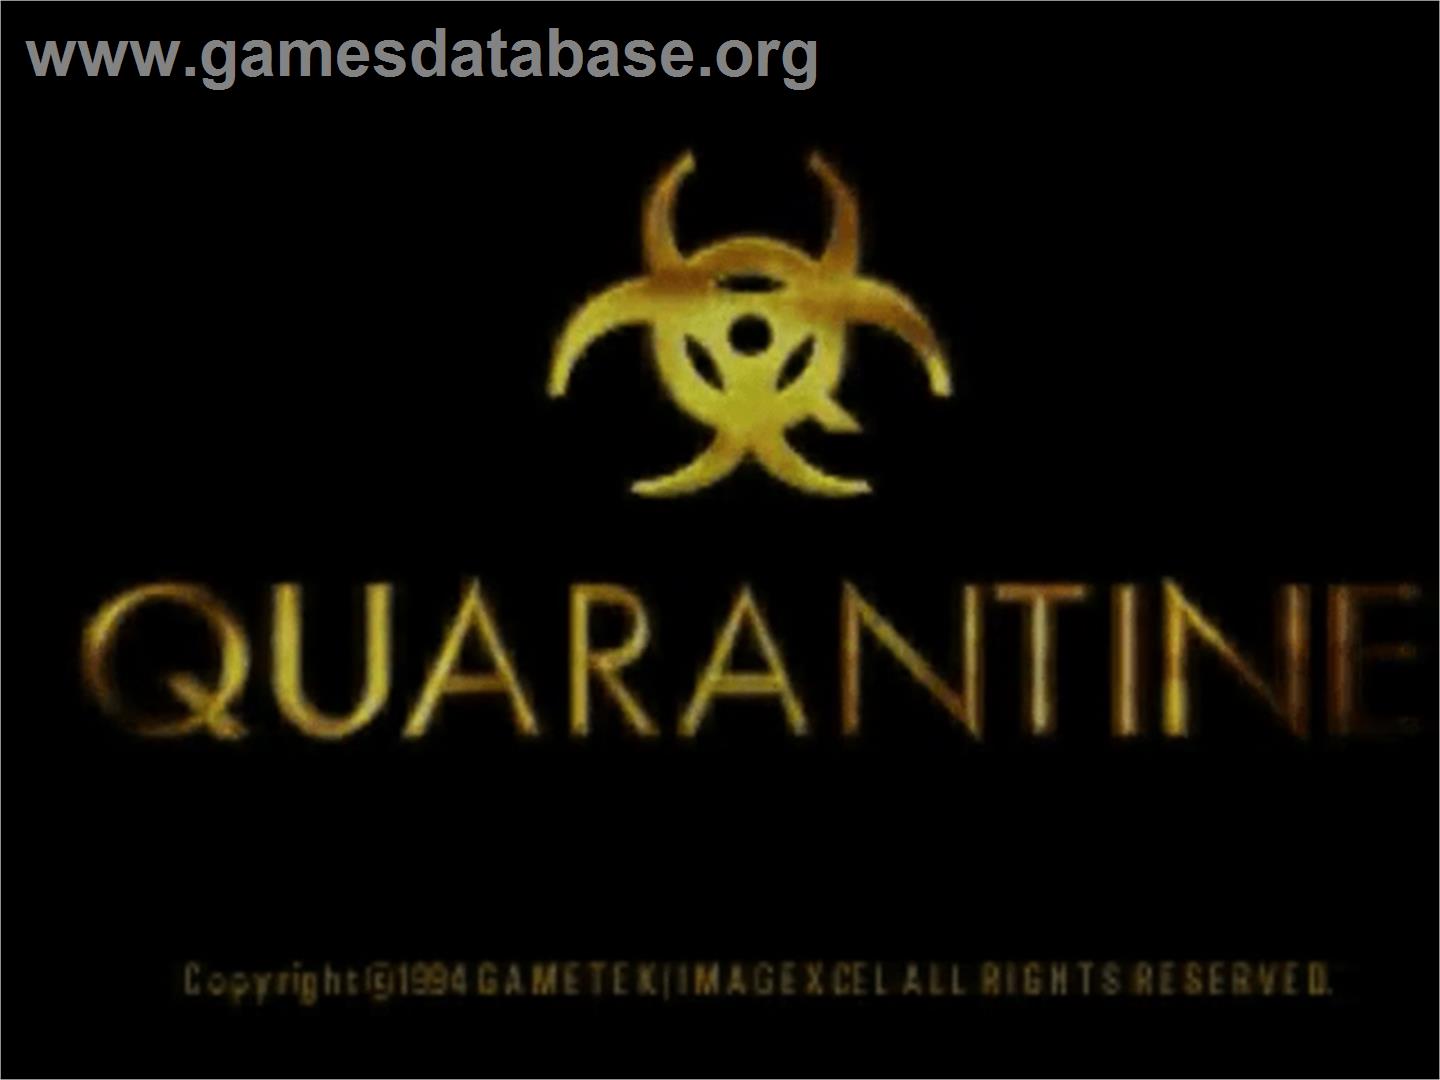 Quarantine - Panasonic 3DO - Artwork - Title Screen